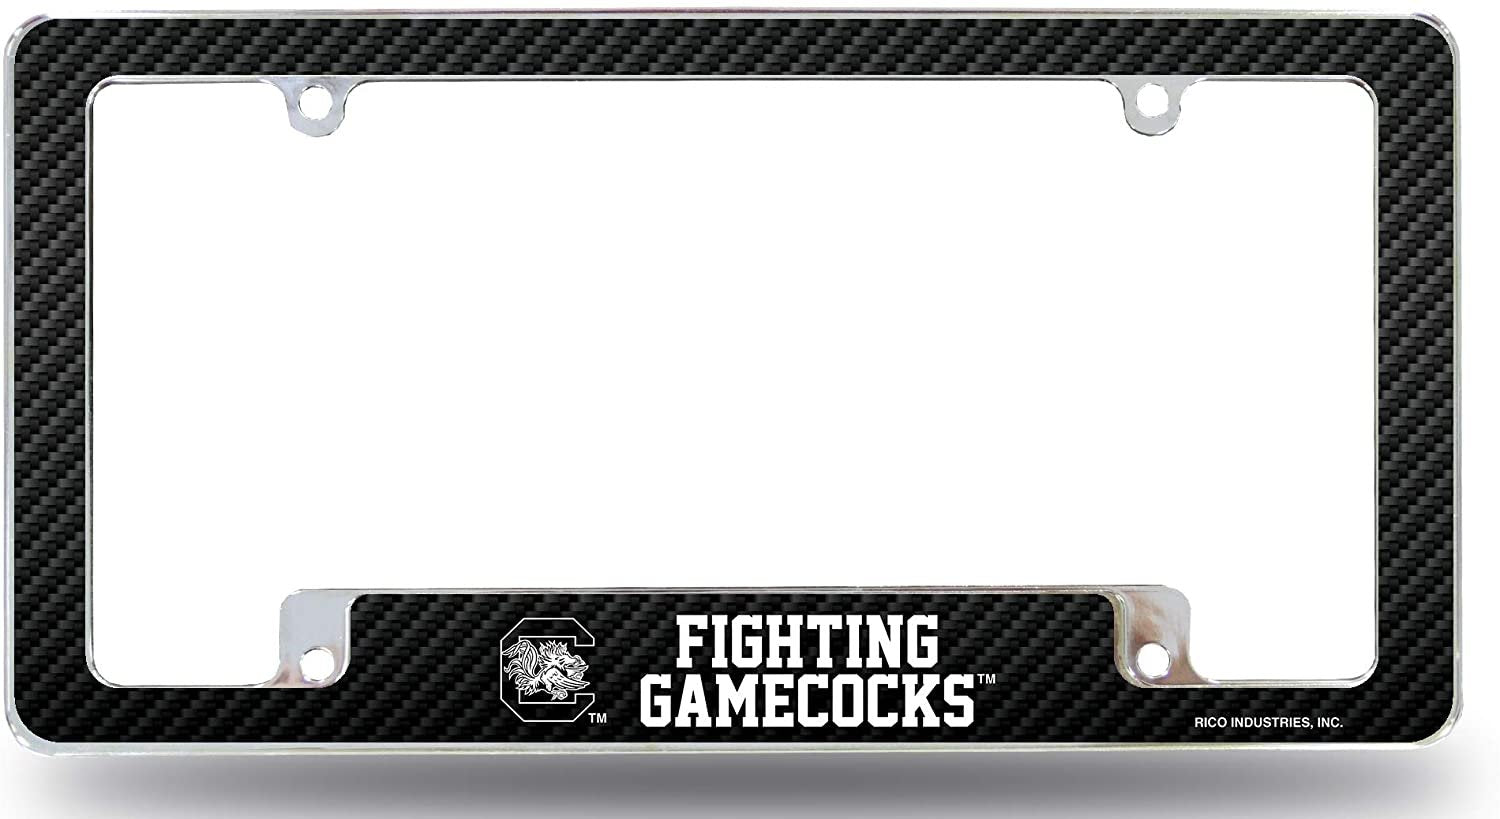 University of South Carolina Gamecocks Metal License Plate Frame Chrome Tag Cover, Carbon Fiber Design, 12x6 Inch